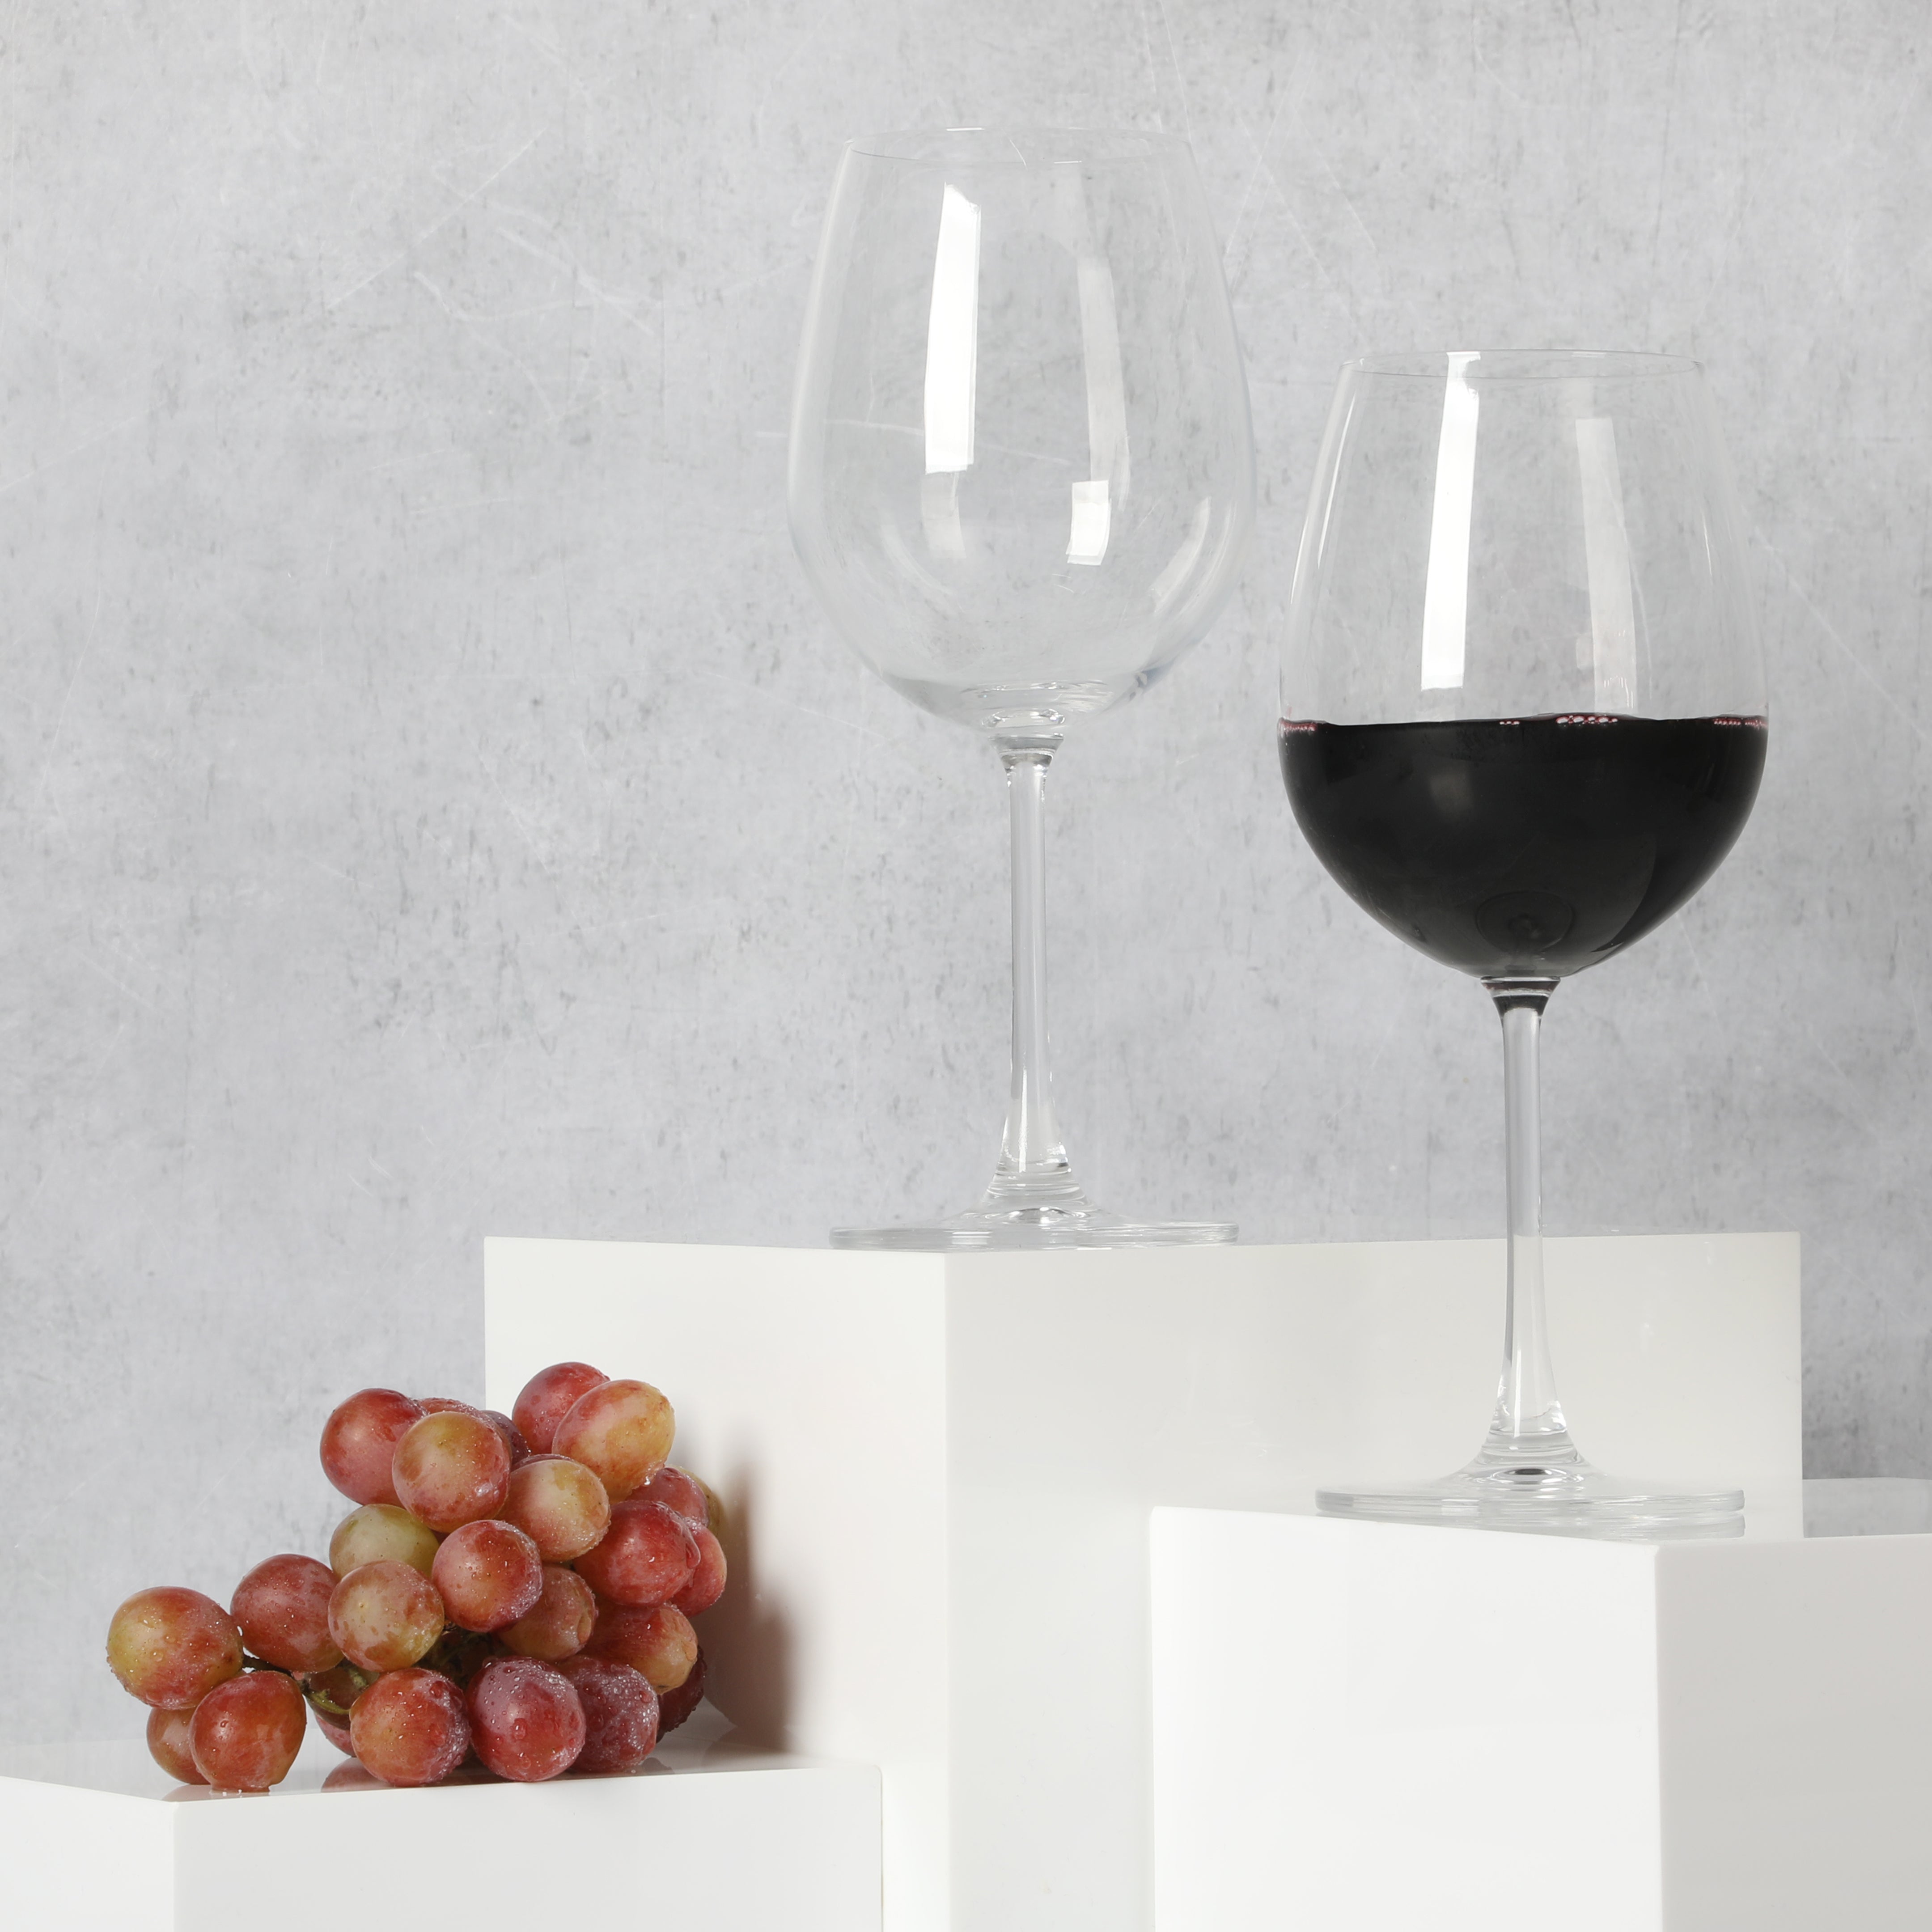 Home Essentials 4pc Wine Glass Set 4 Pc Set Clear